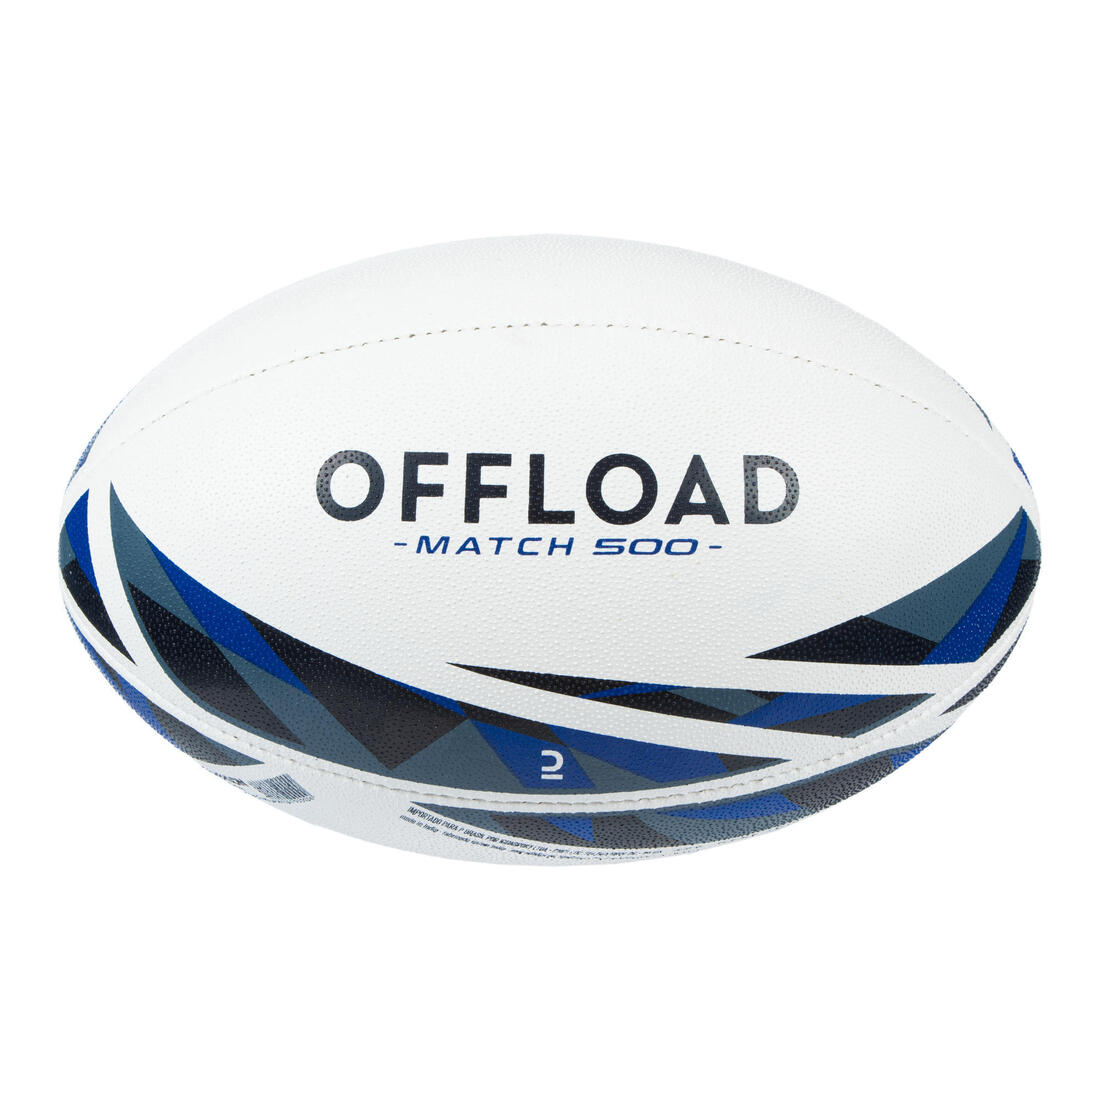 OFFLOAD(オフロード) ラグビー ボール 5号 R500 Match